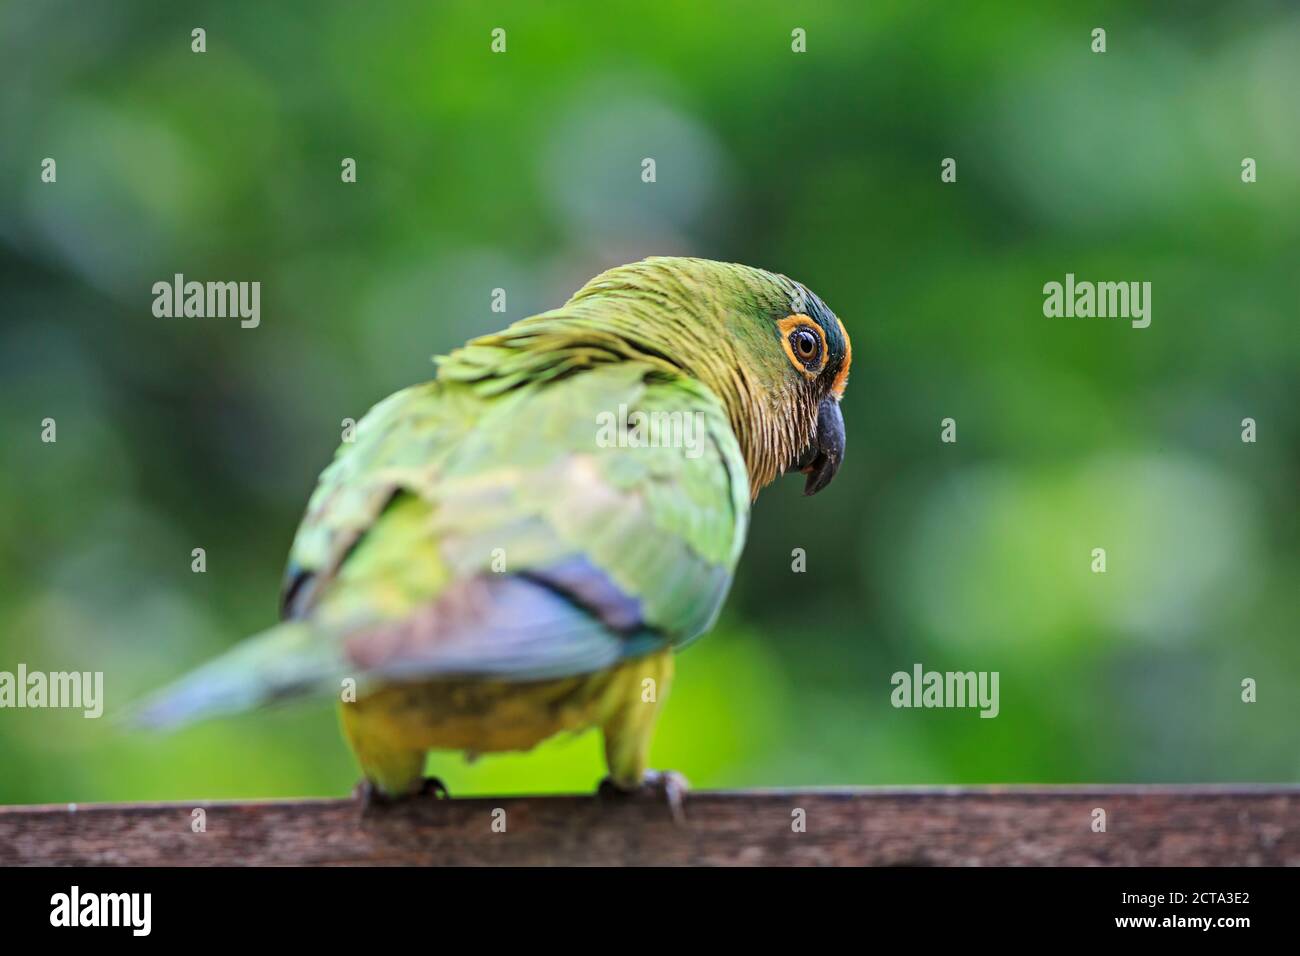 South America, Brasilia, Mato Grosso do Sul, Pantanal, Peach-fronted Parakeets, Aratinga aurea Stock Photo